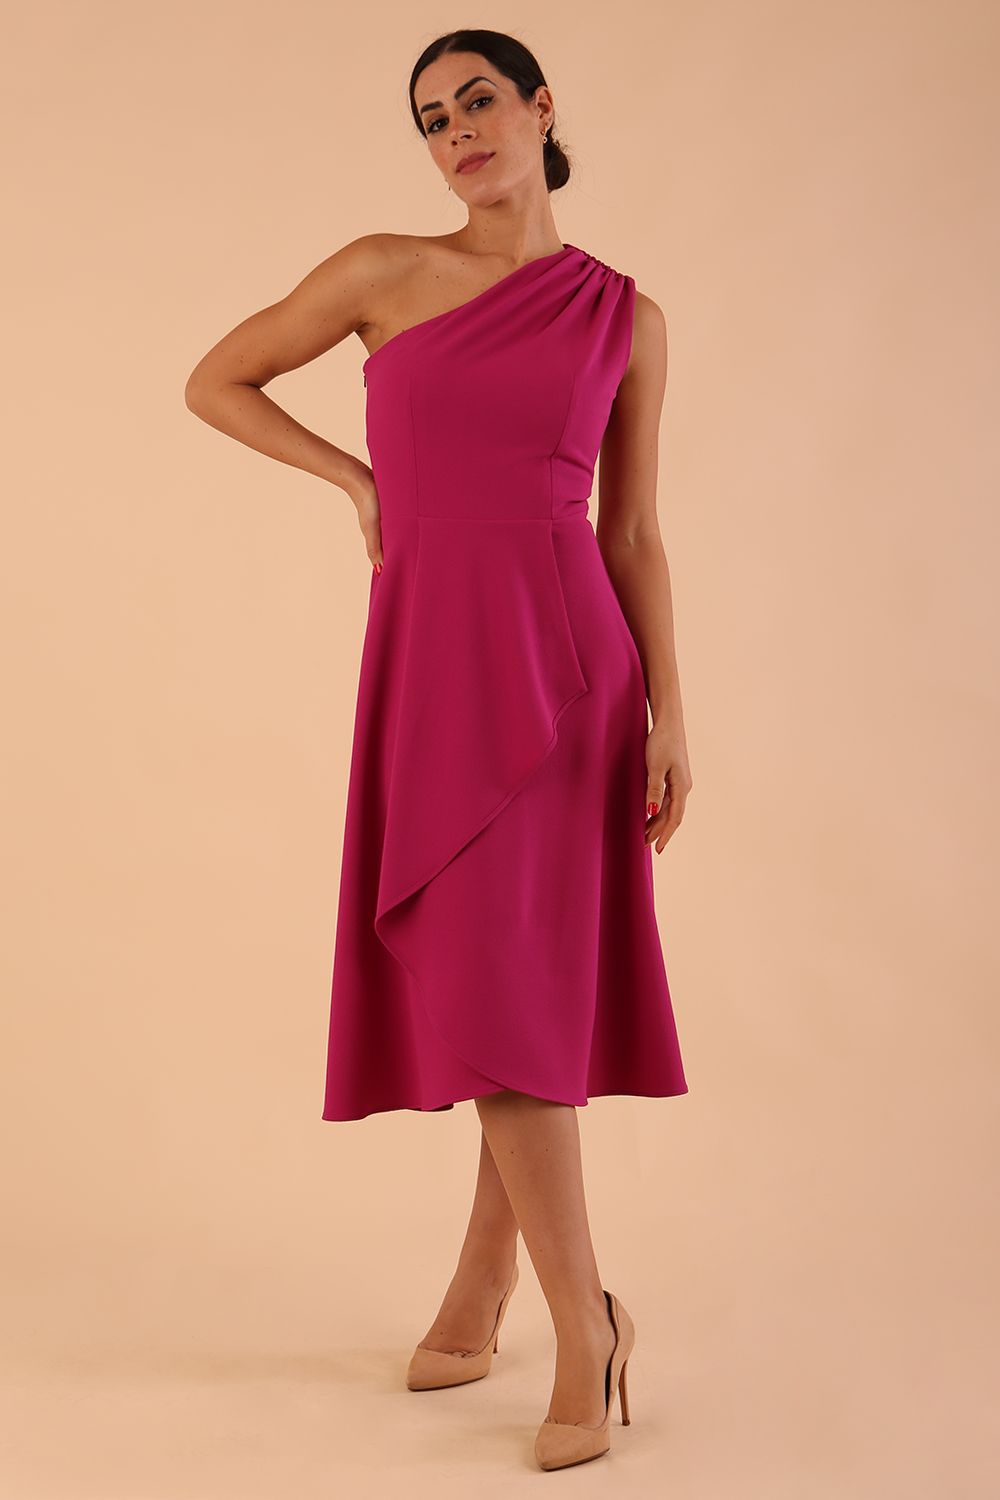 Model wearing a diva catwalk Portia One Shoulder Swing Dress in Magenta Colour